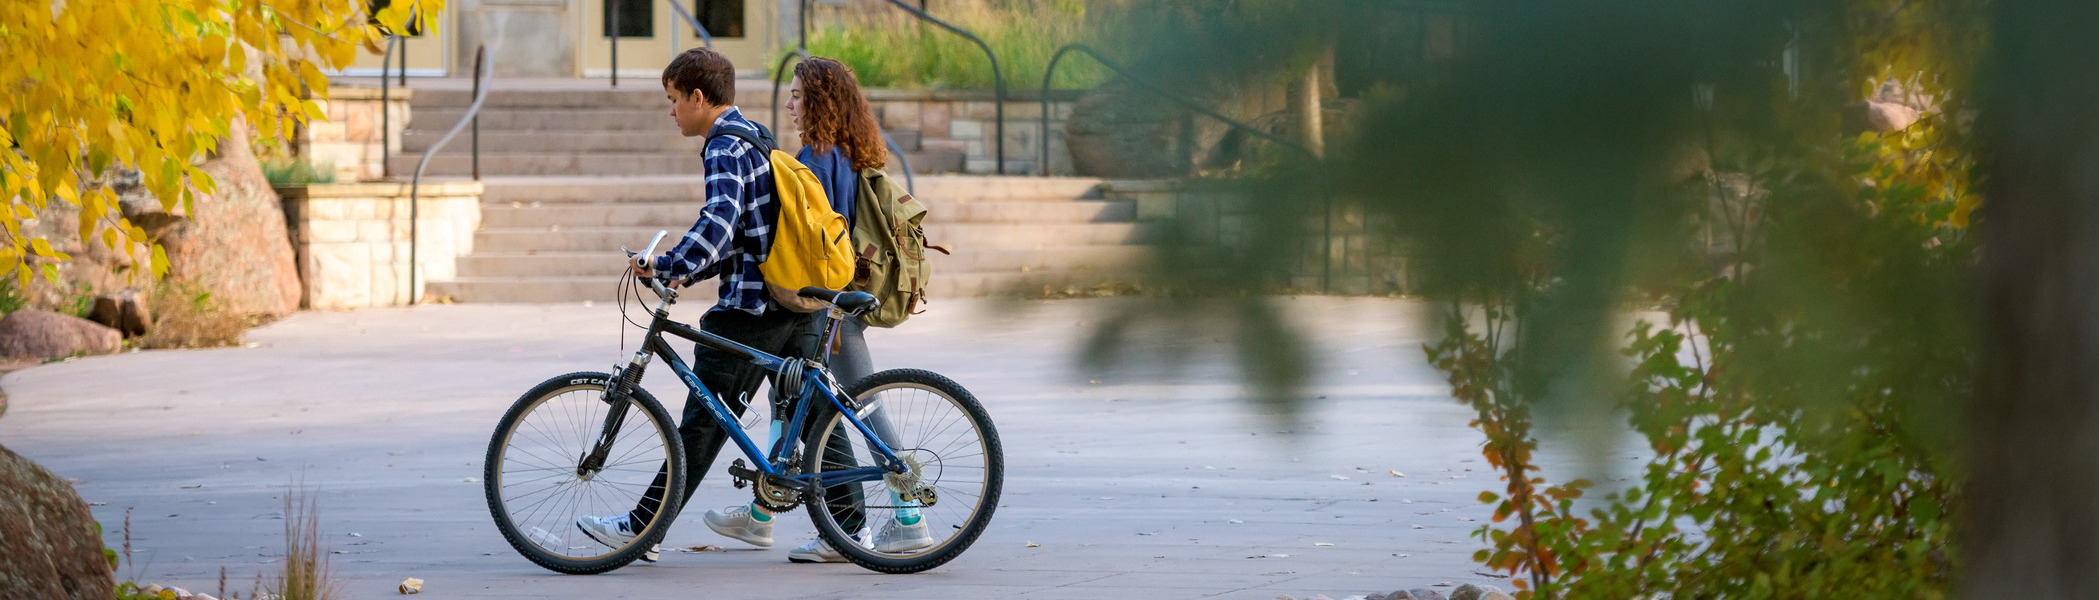 Students biking on campus